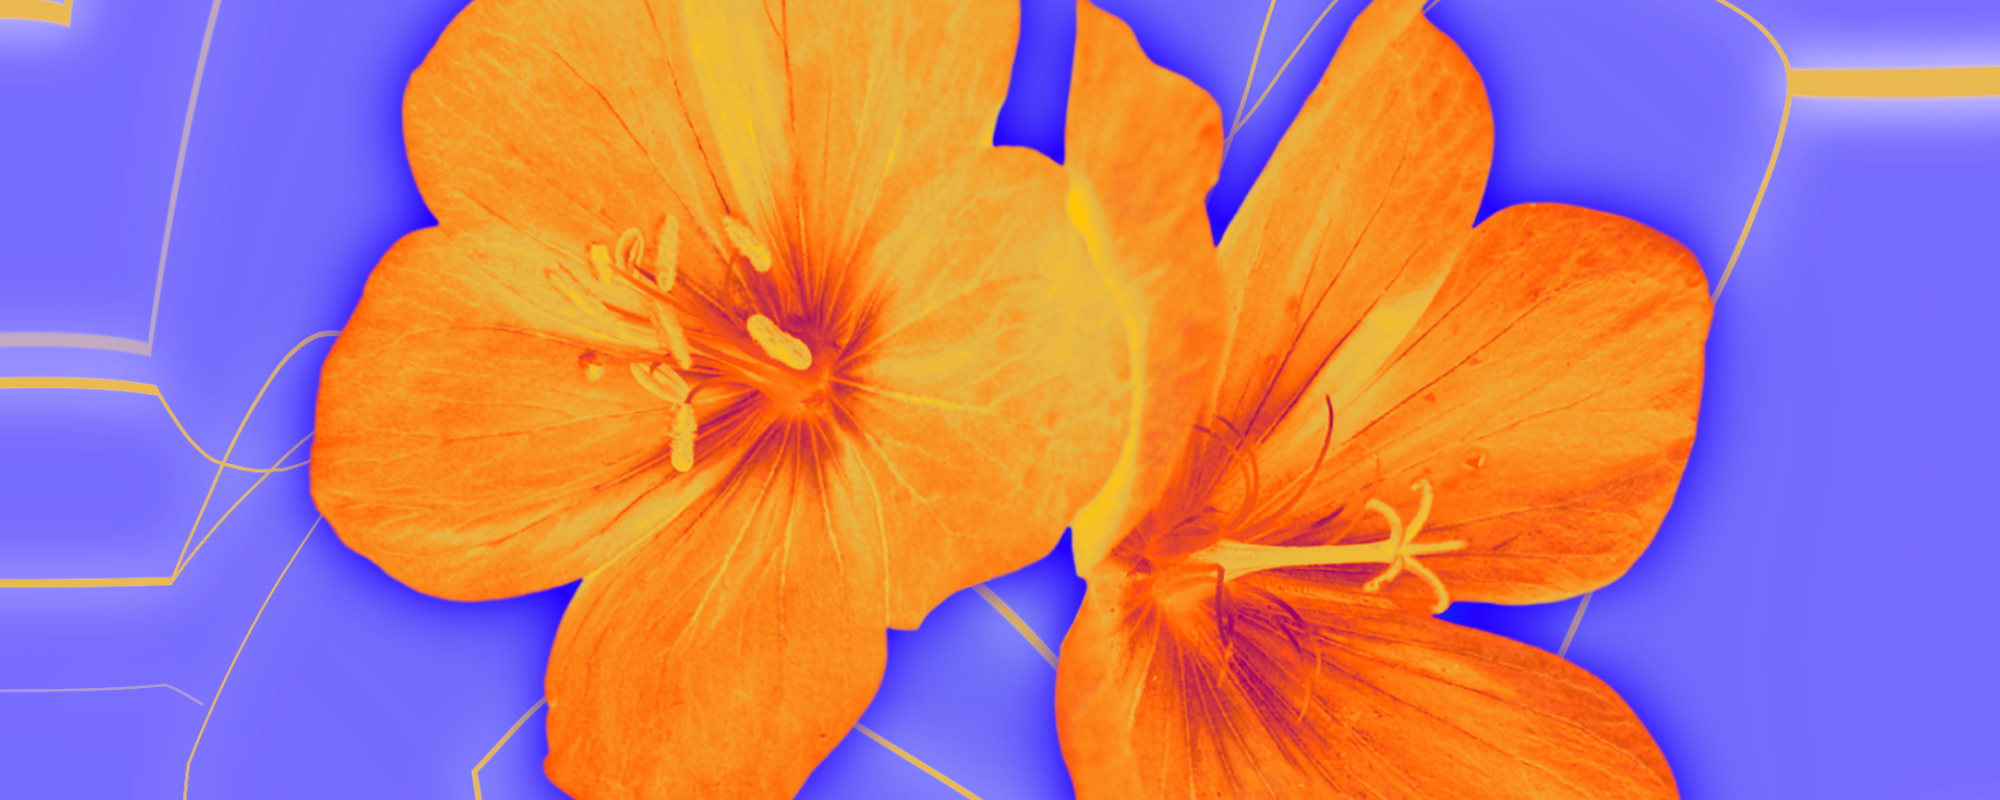 image of orange flowers on a purple background